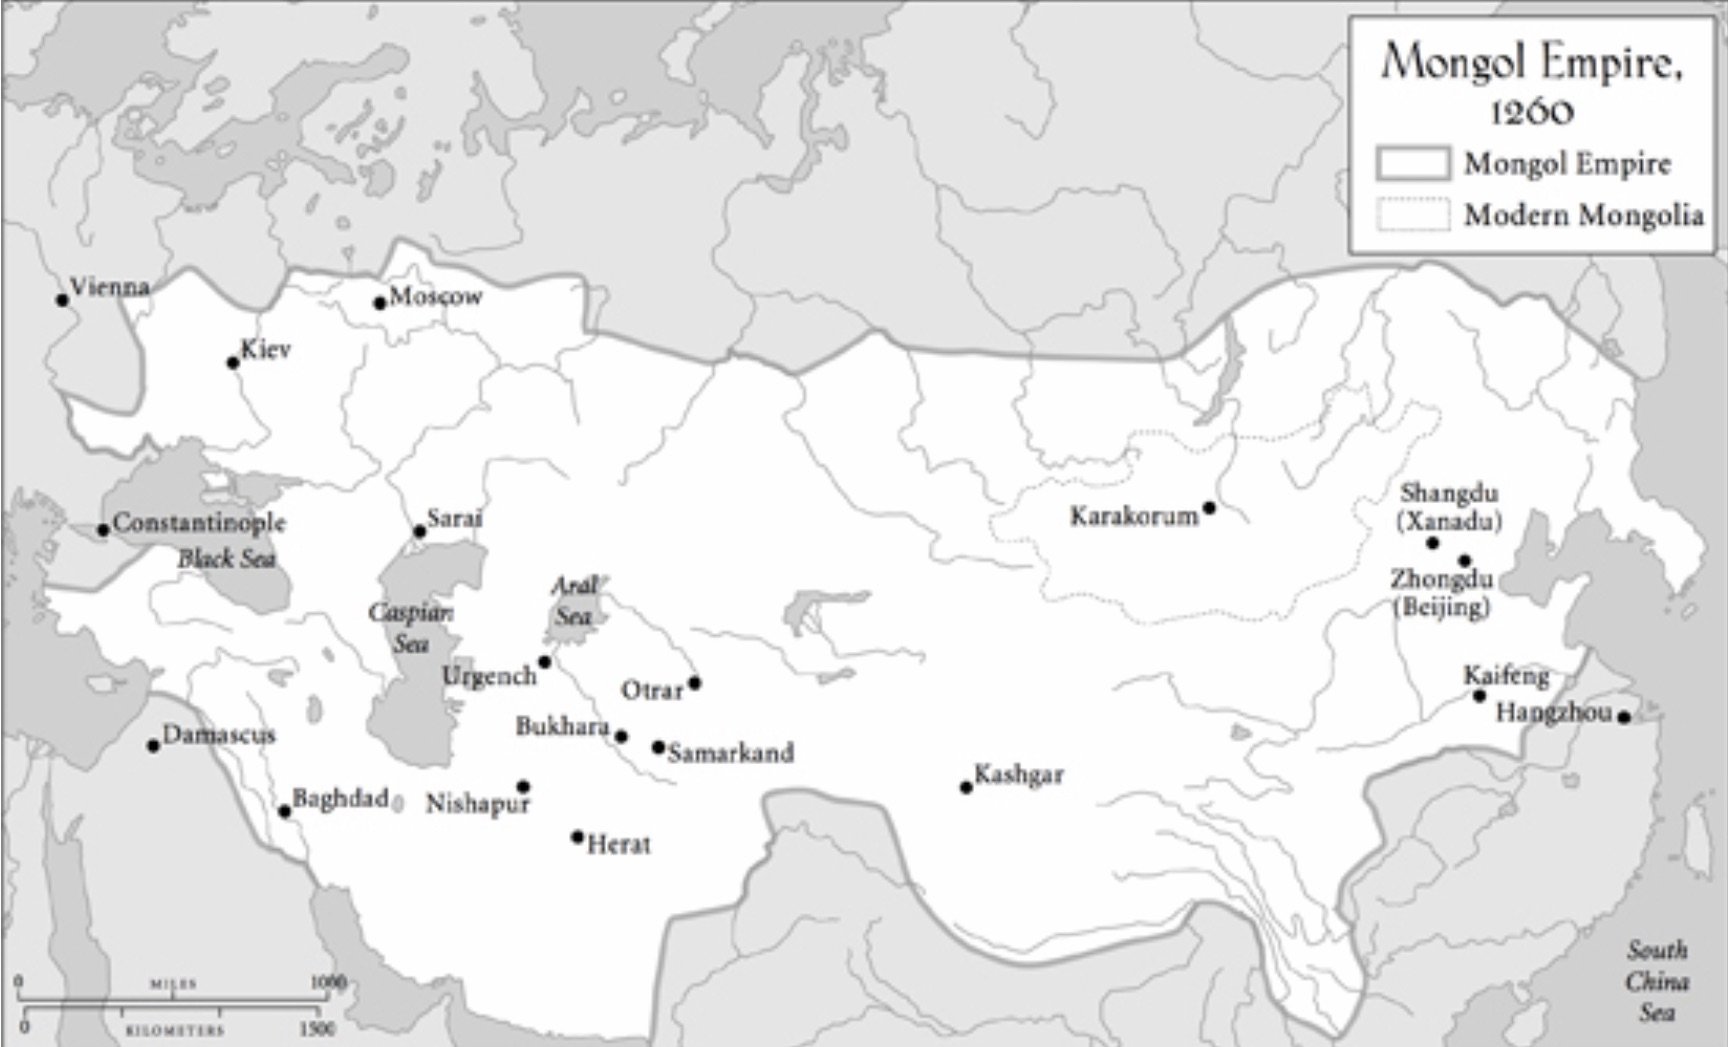 Mongol Empire in 1260.jpeg